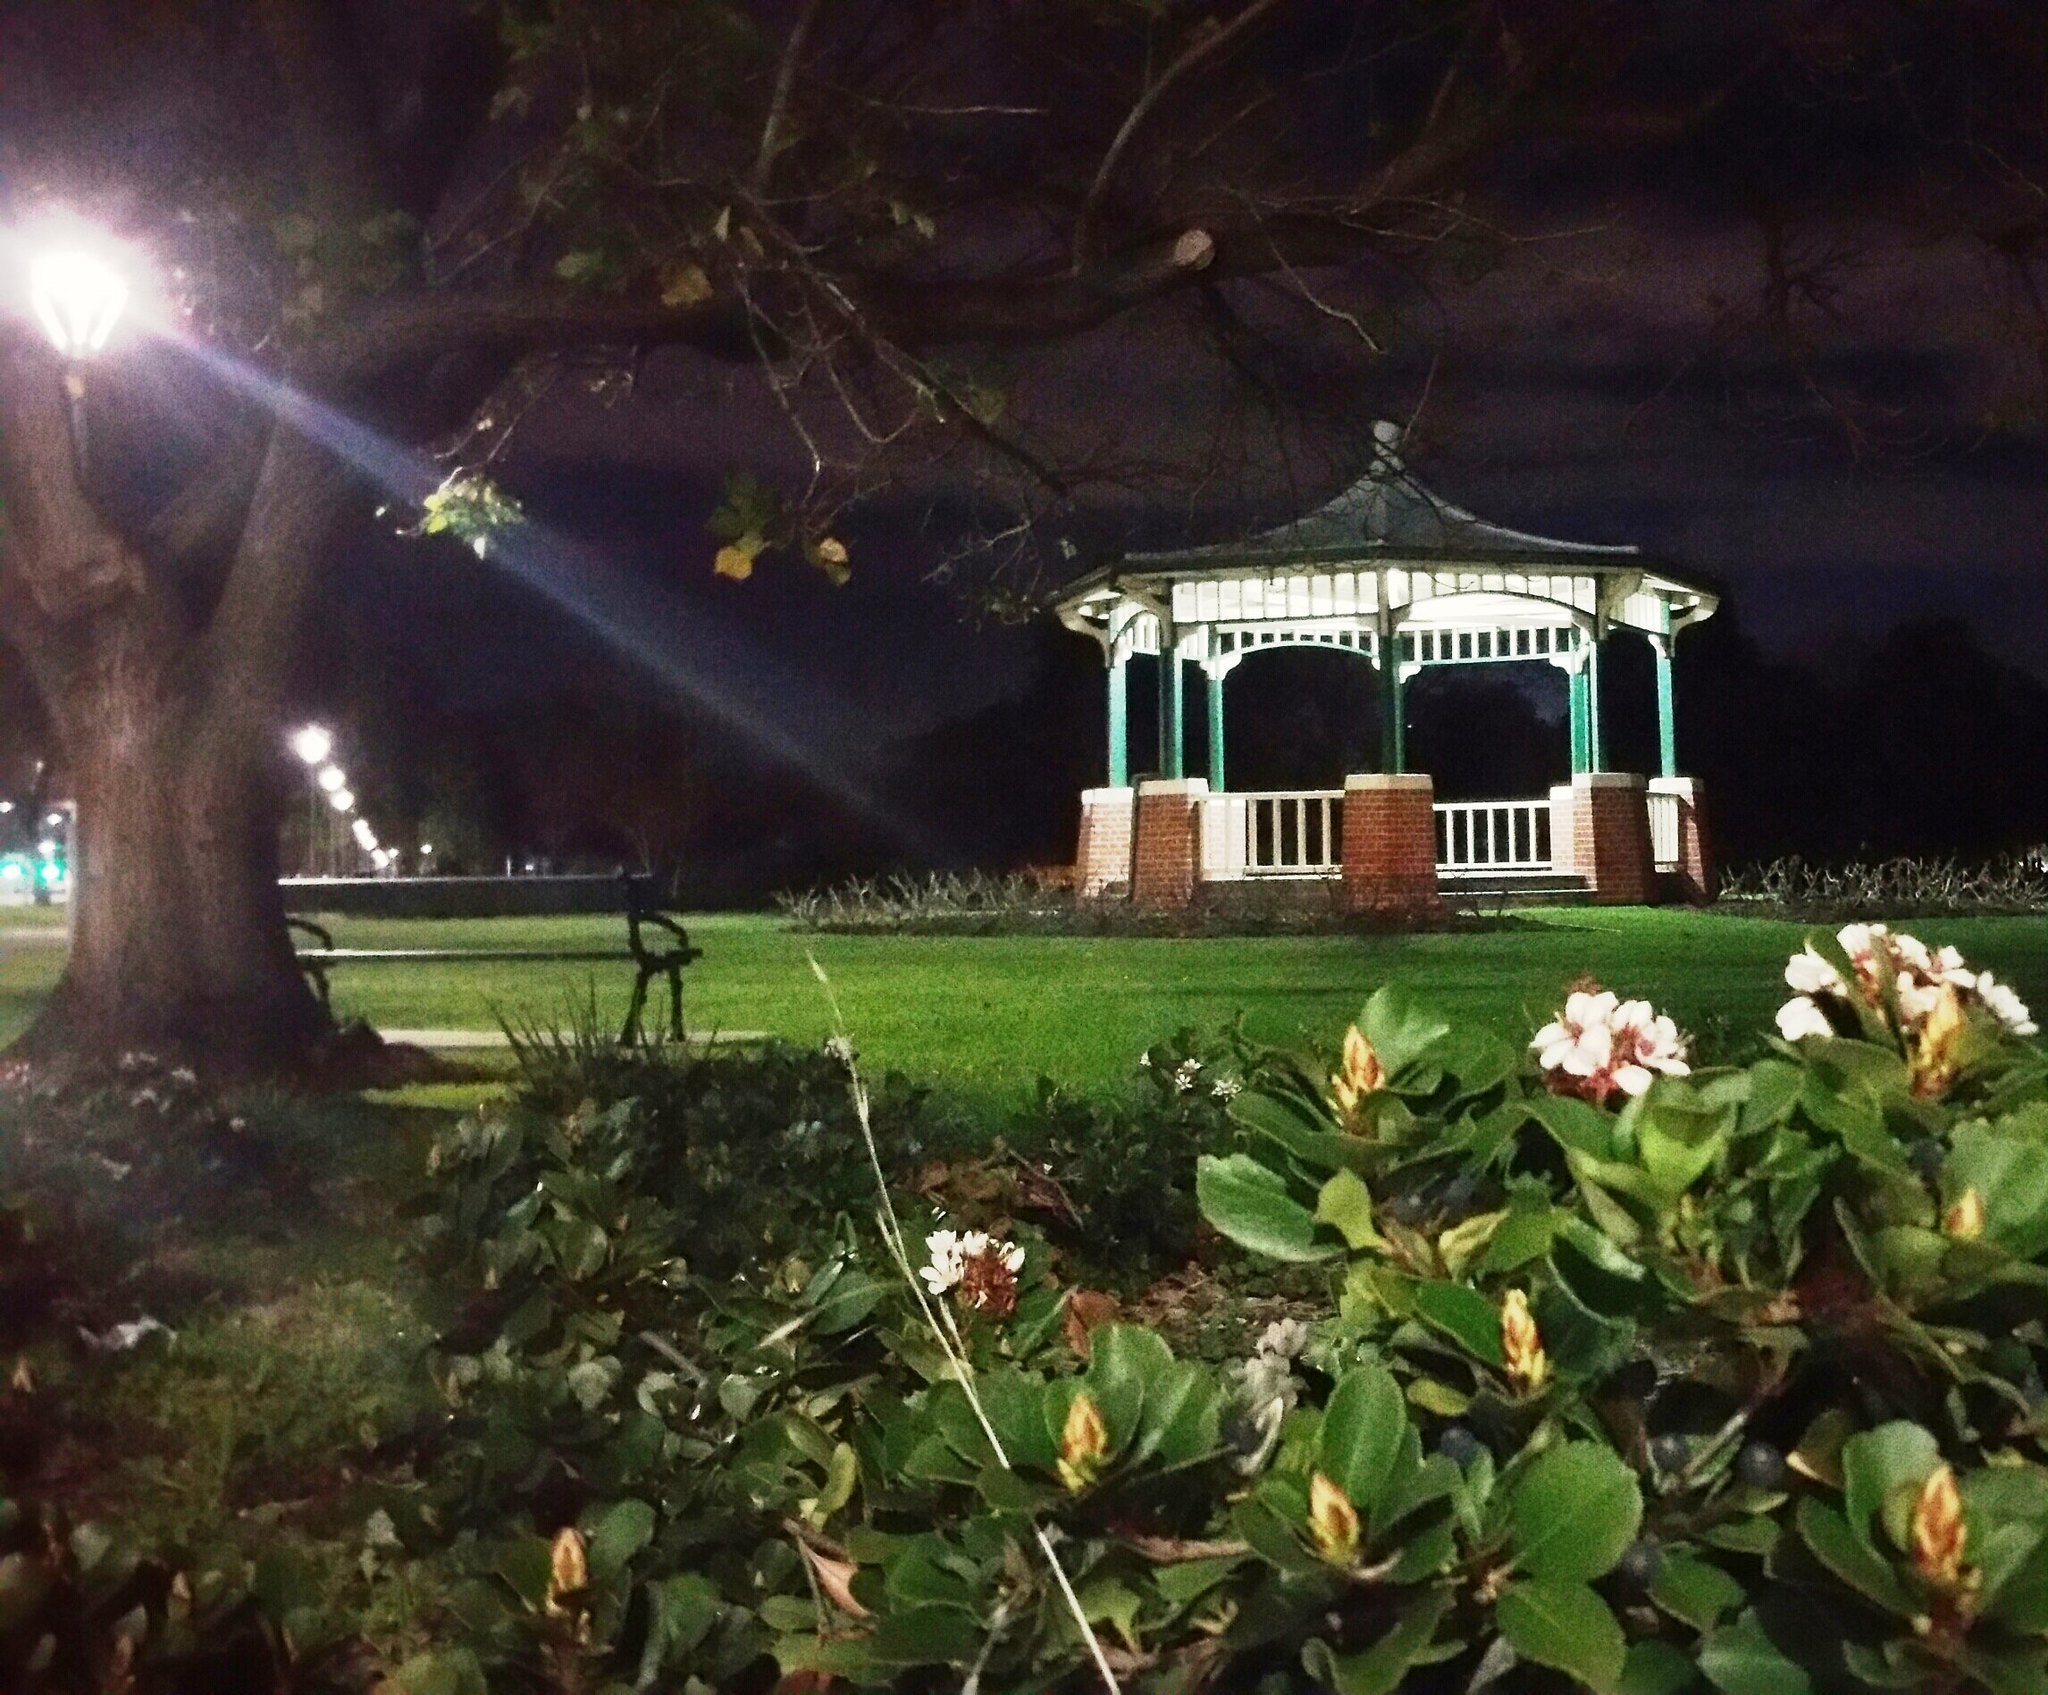 03_Kingston Gardens rotunda at night.jpg